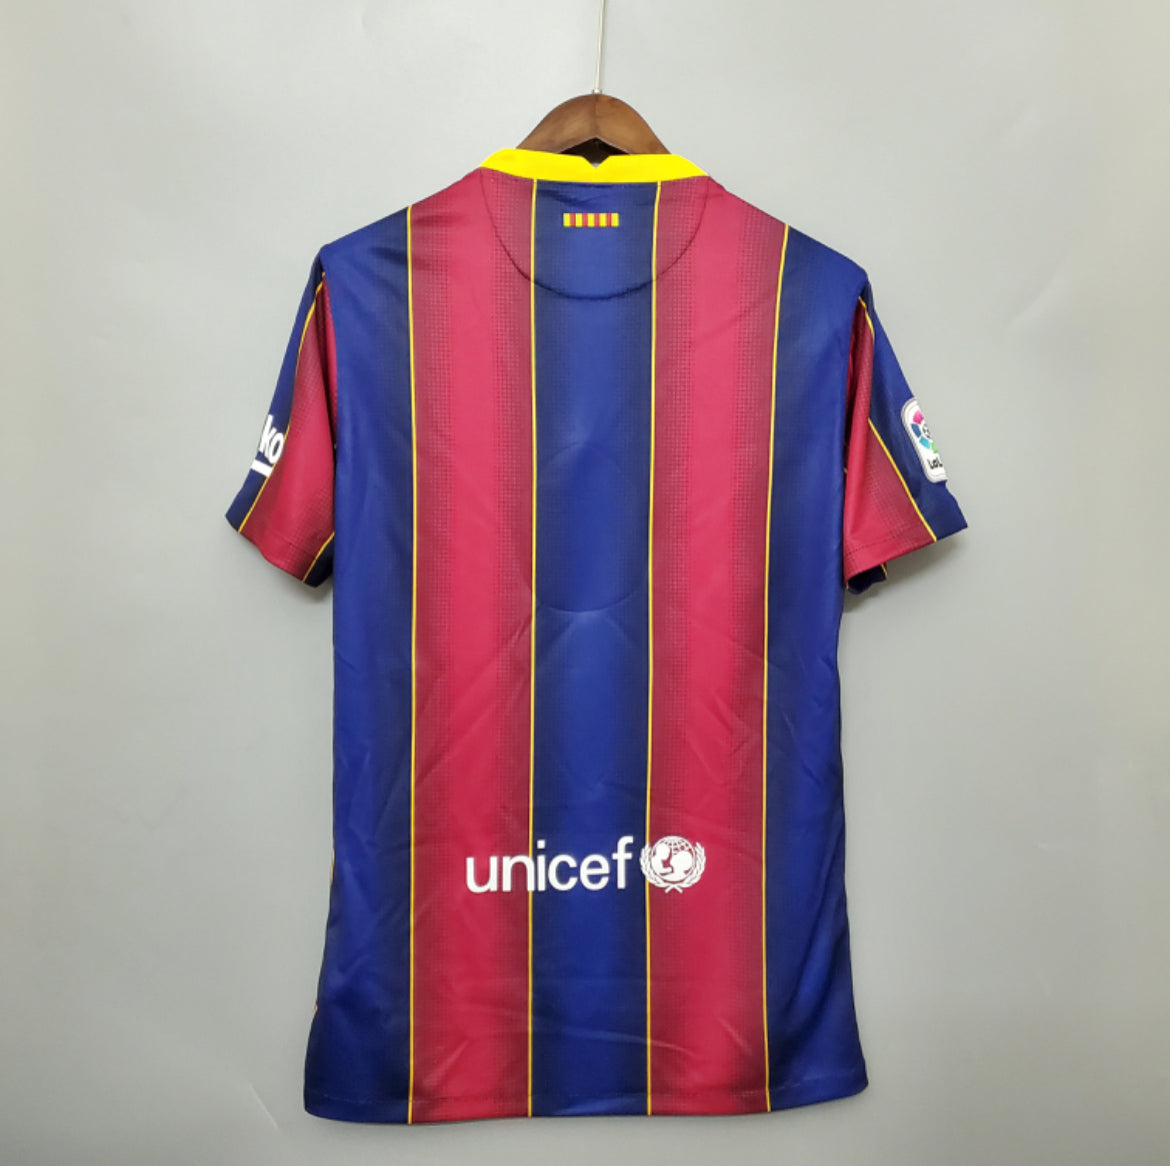 FC Barcelona 2020-21 Home Kit